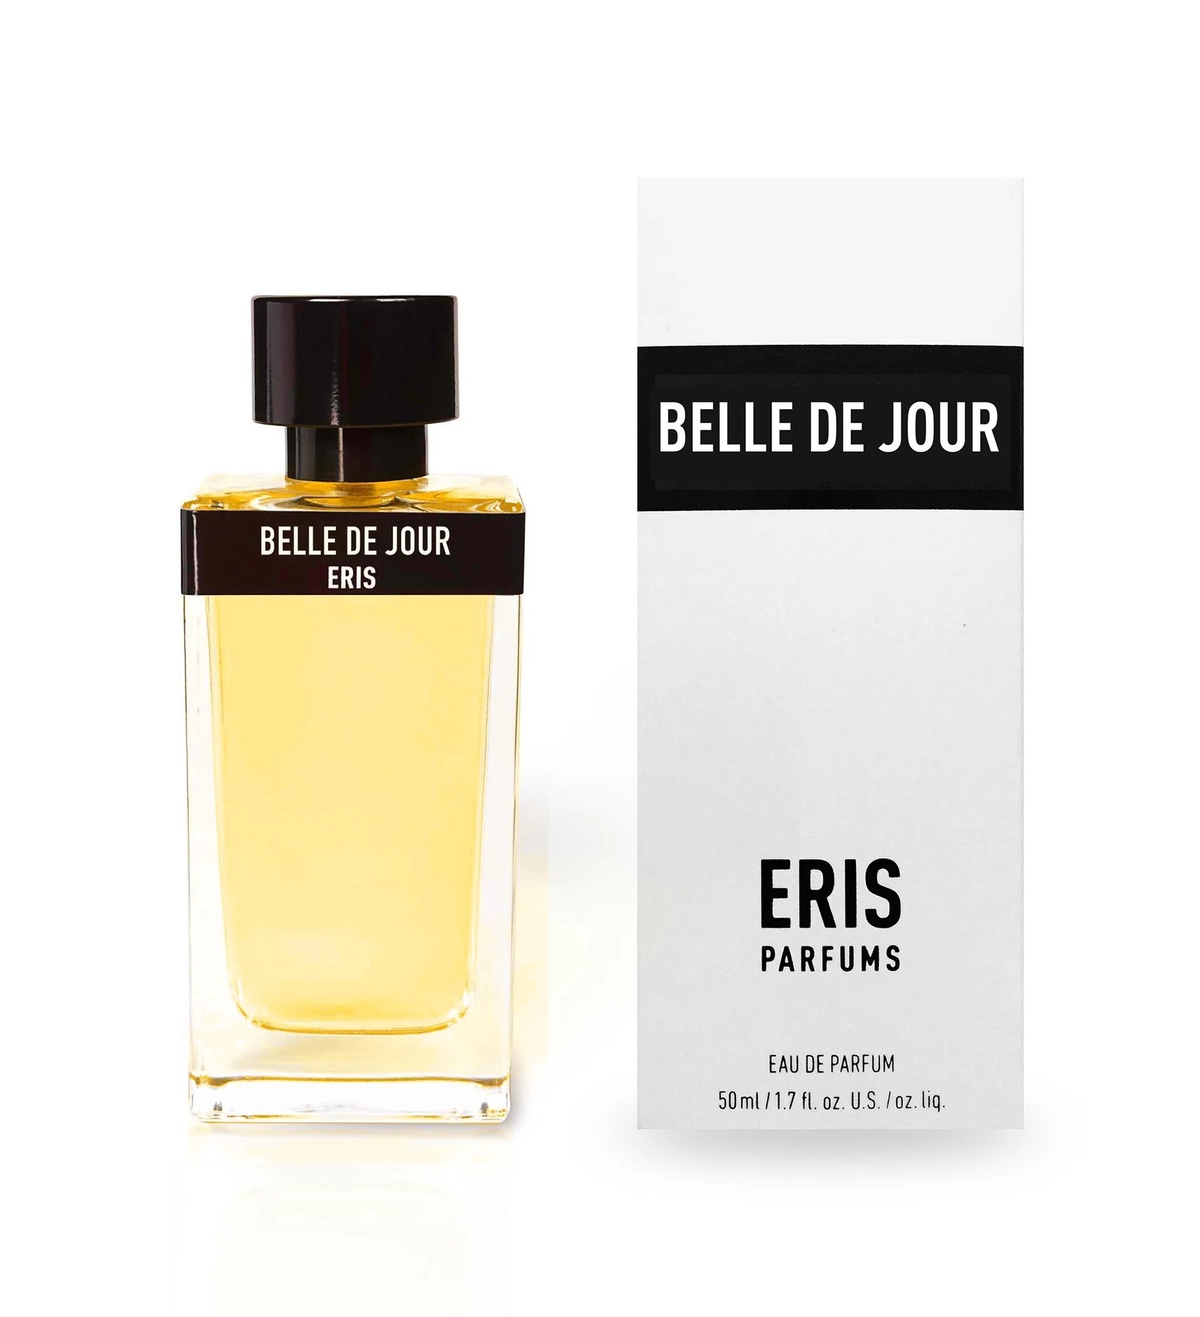 Belle de Jour Perfume: A Gentle Whisper of Elegance